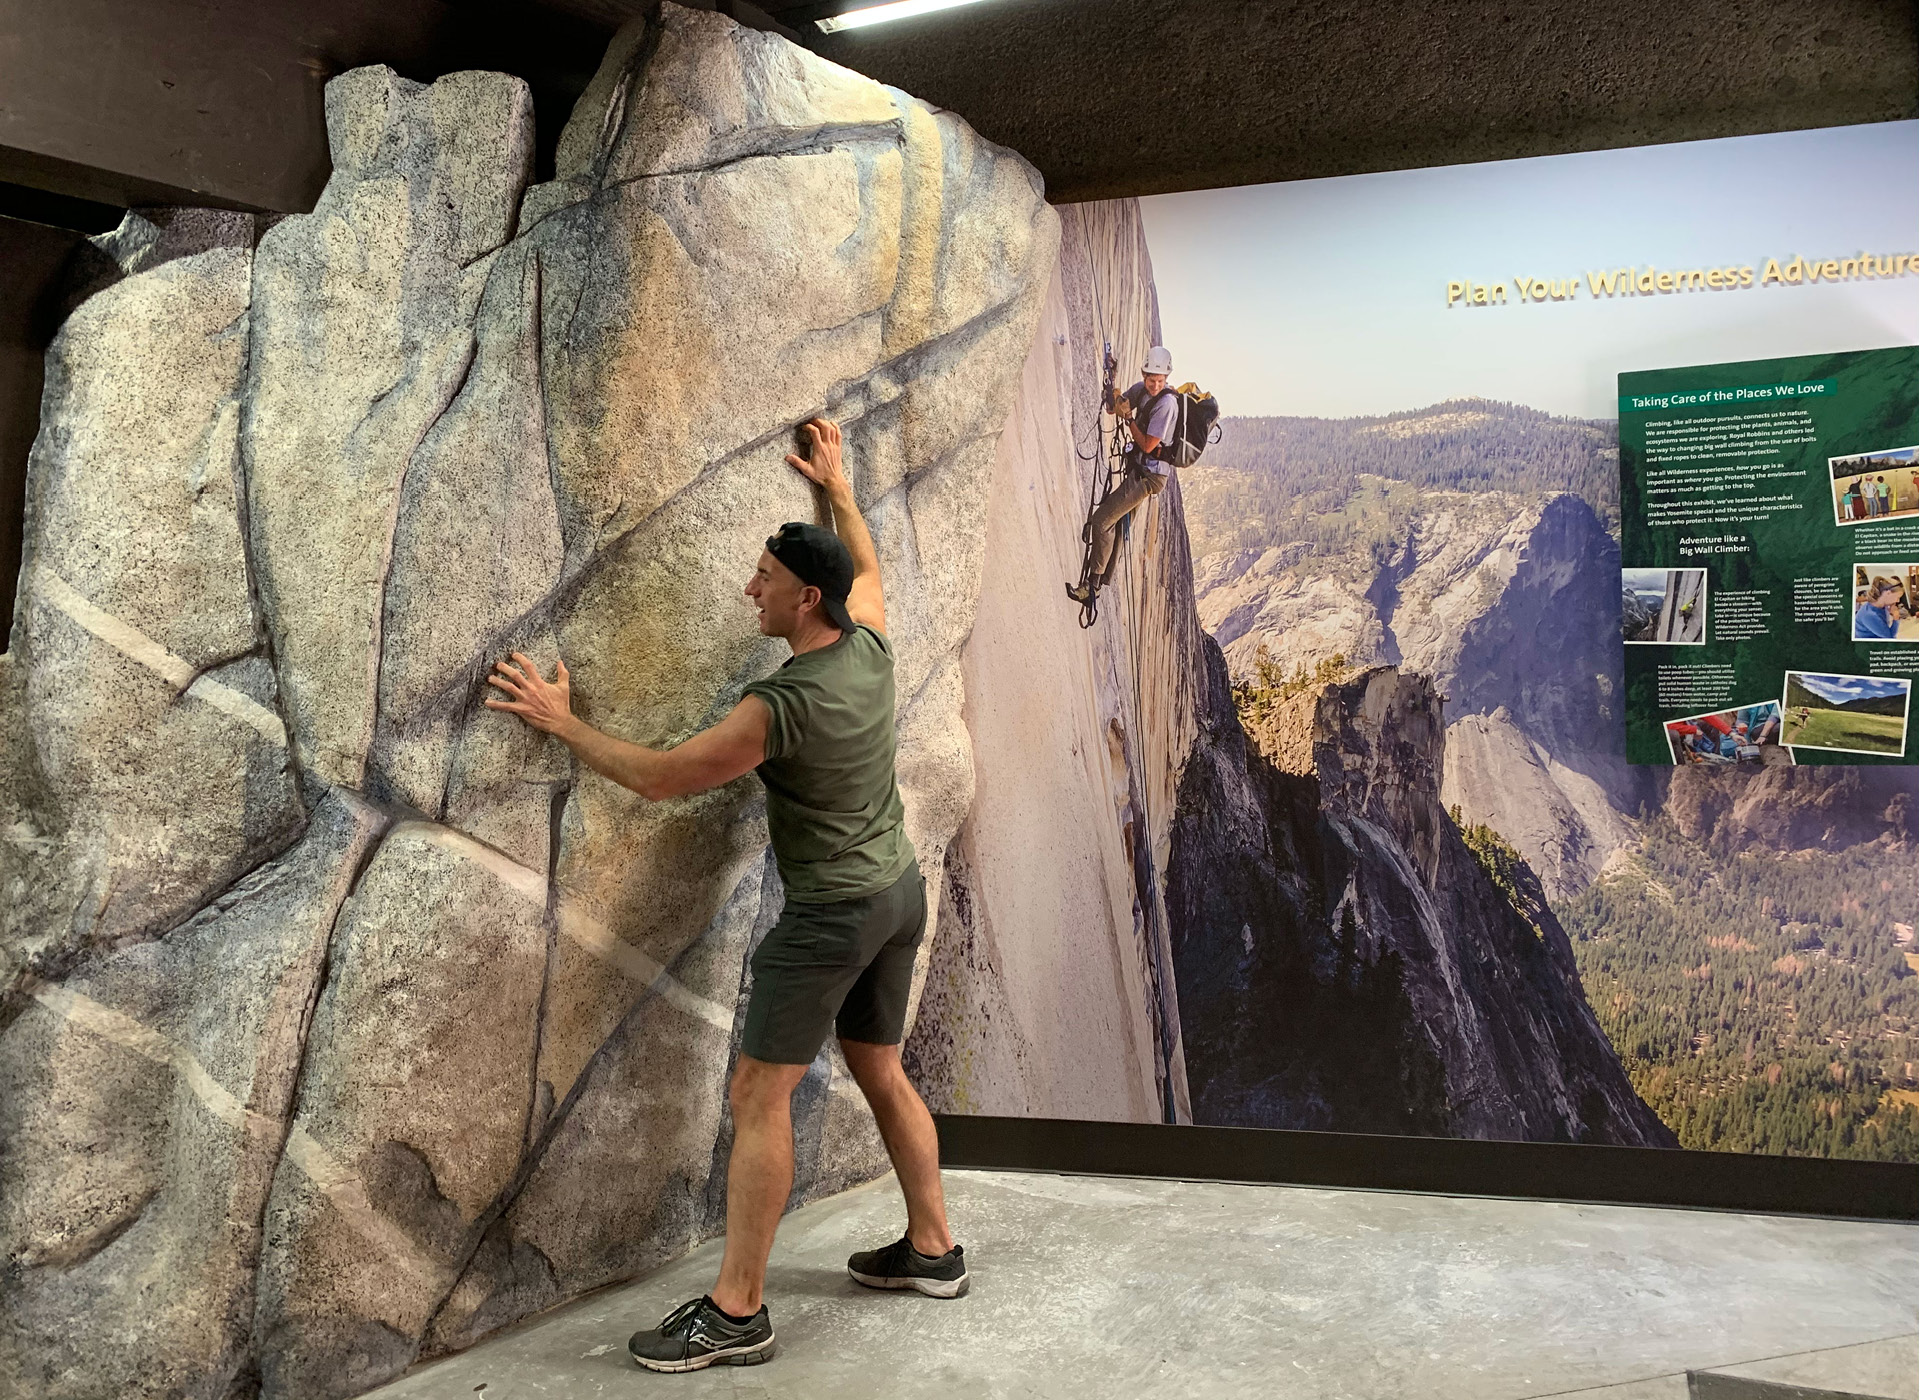 Yosemite Valley Visitor Center Climbing Exhibit